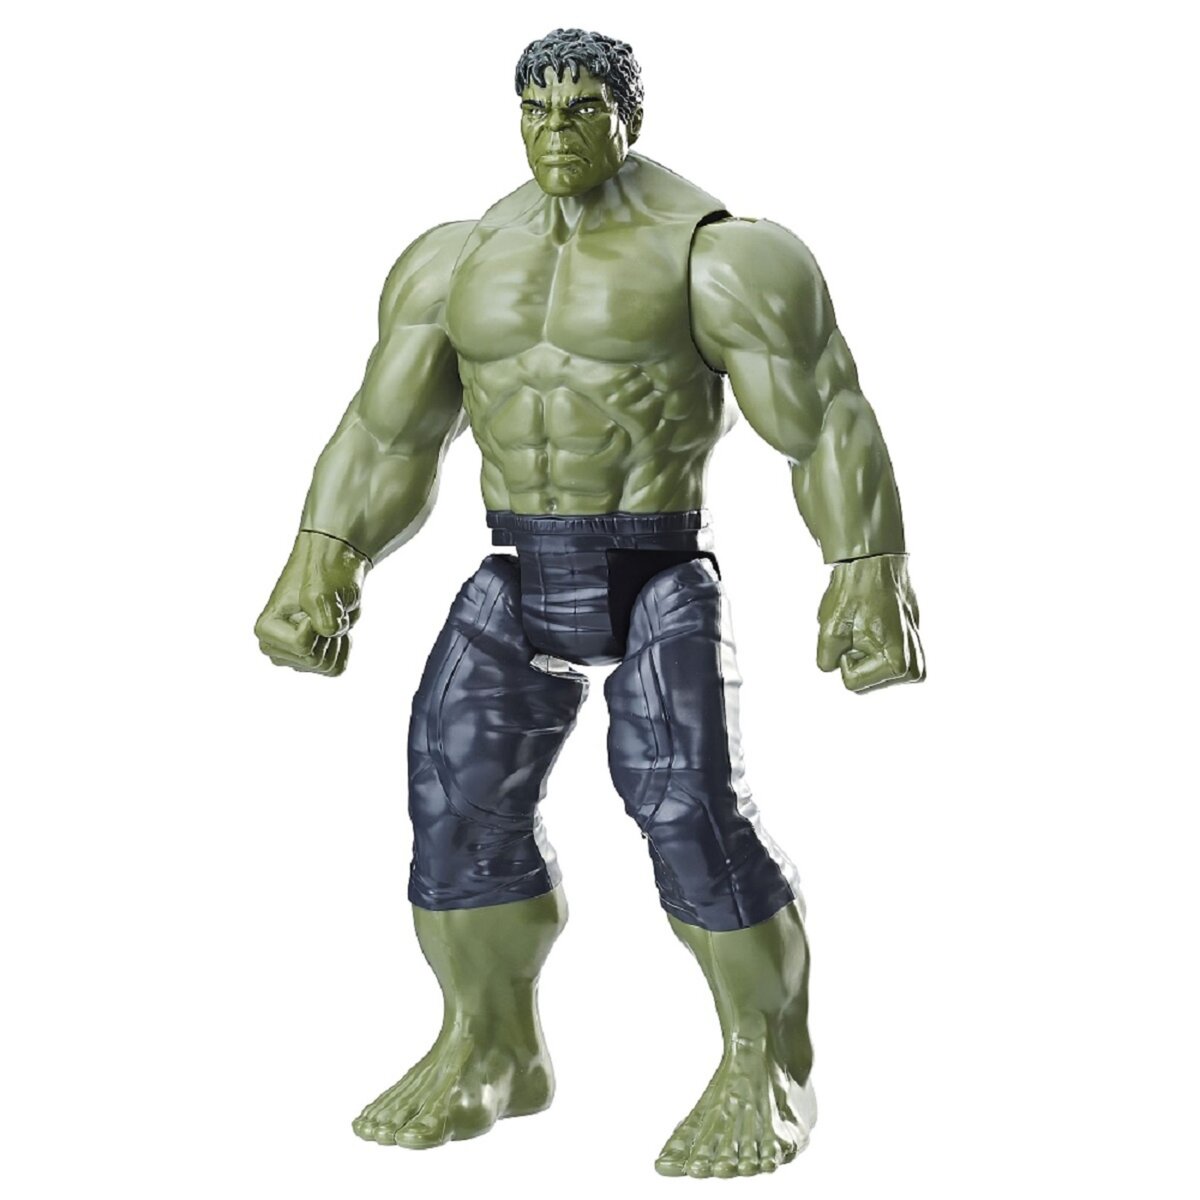 HASBRO Figurine Titan 30 cm - Avengers Infinity War Hulk